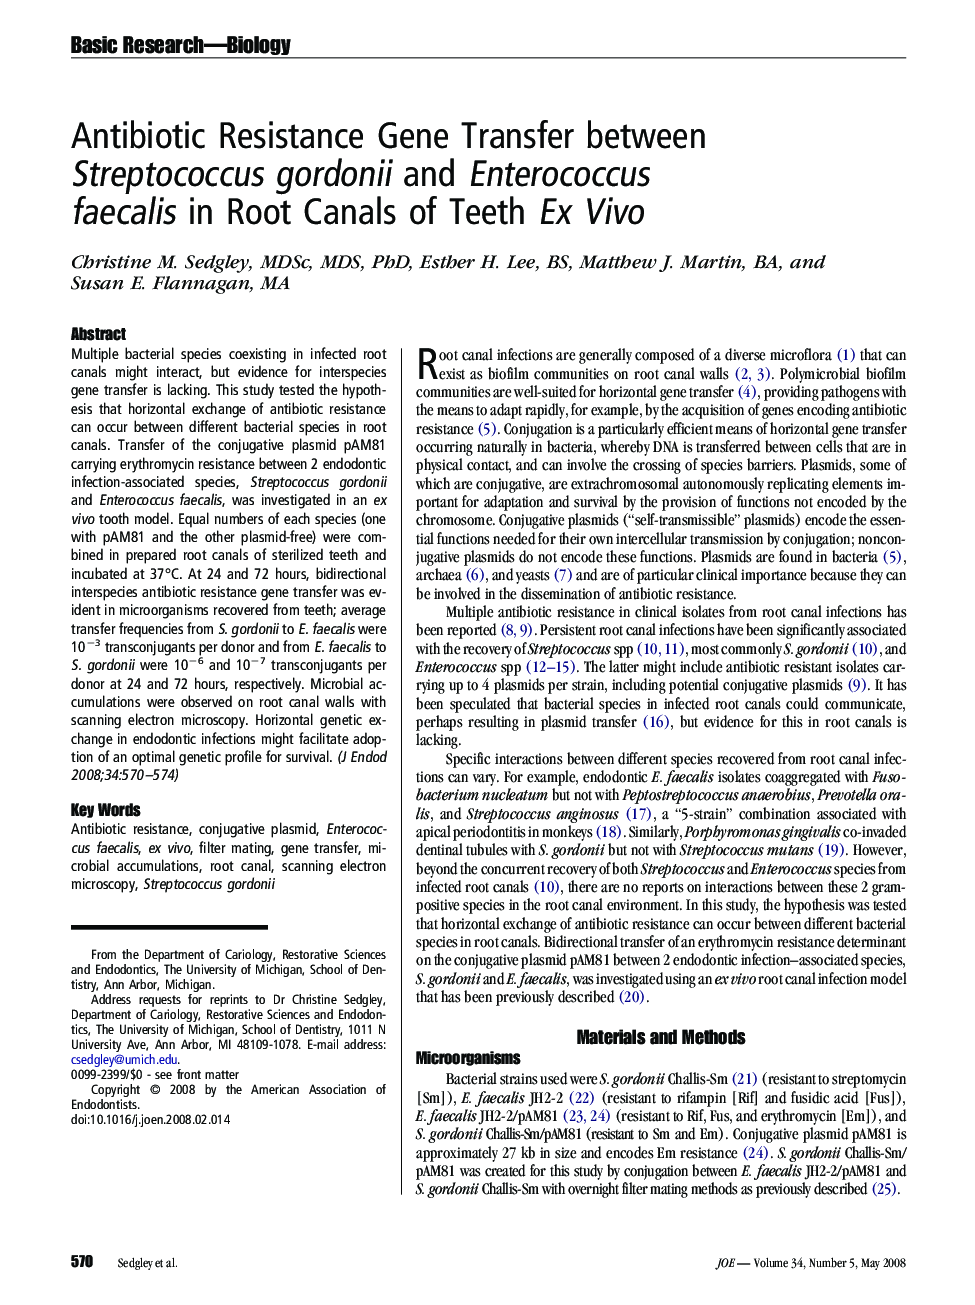 Antibiotic Resistance Gene Transfer between Streptococcus gordonii and Enterococcus faecalis in Root Canals of Teeth Ex Vivo